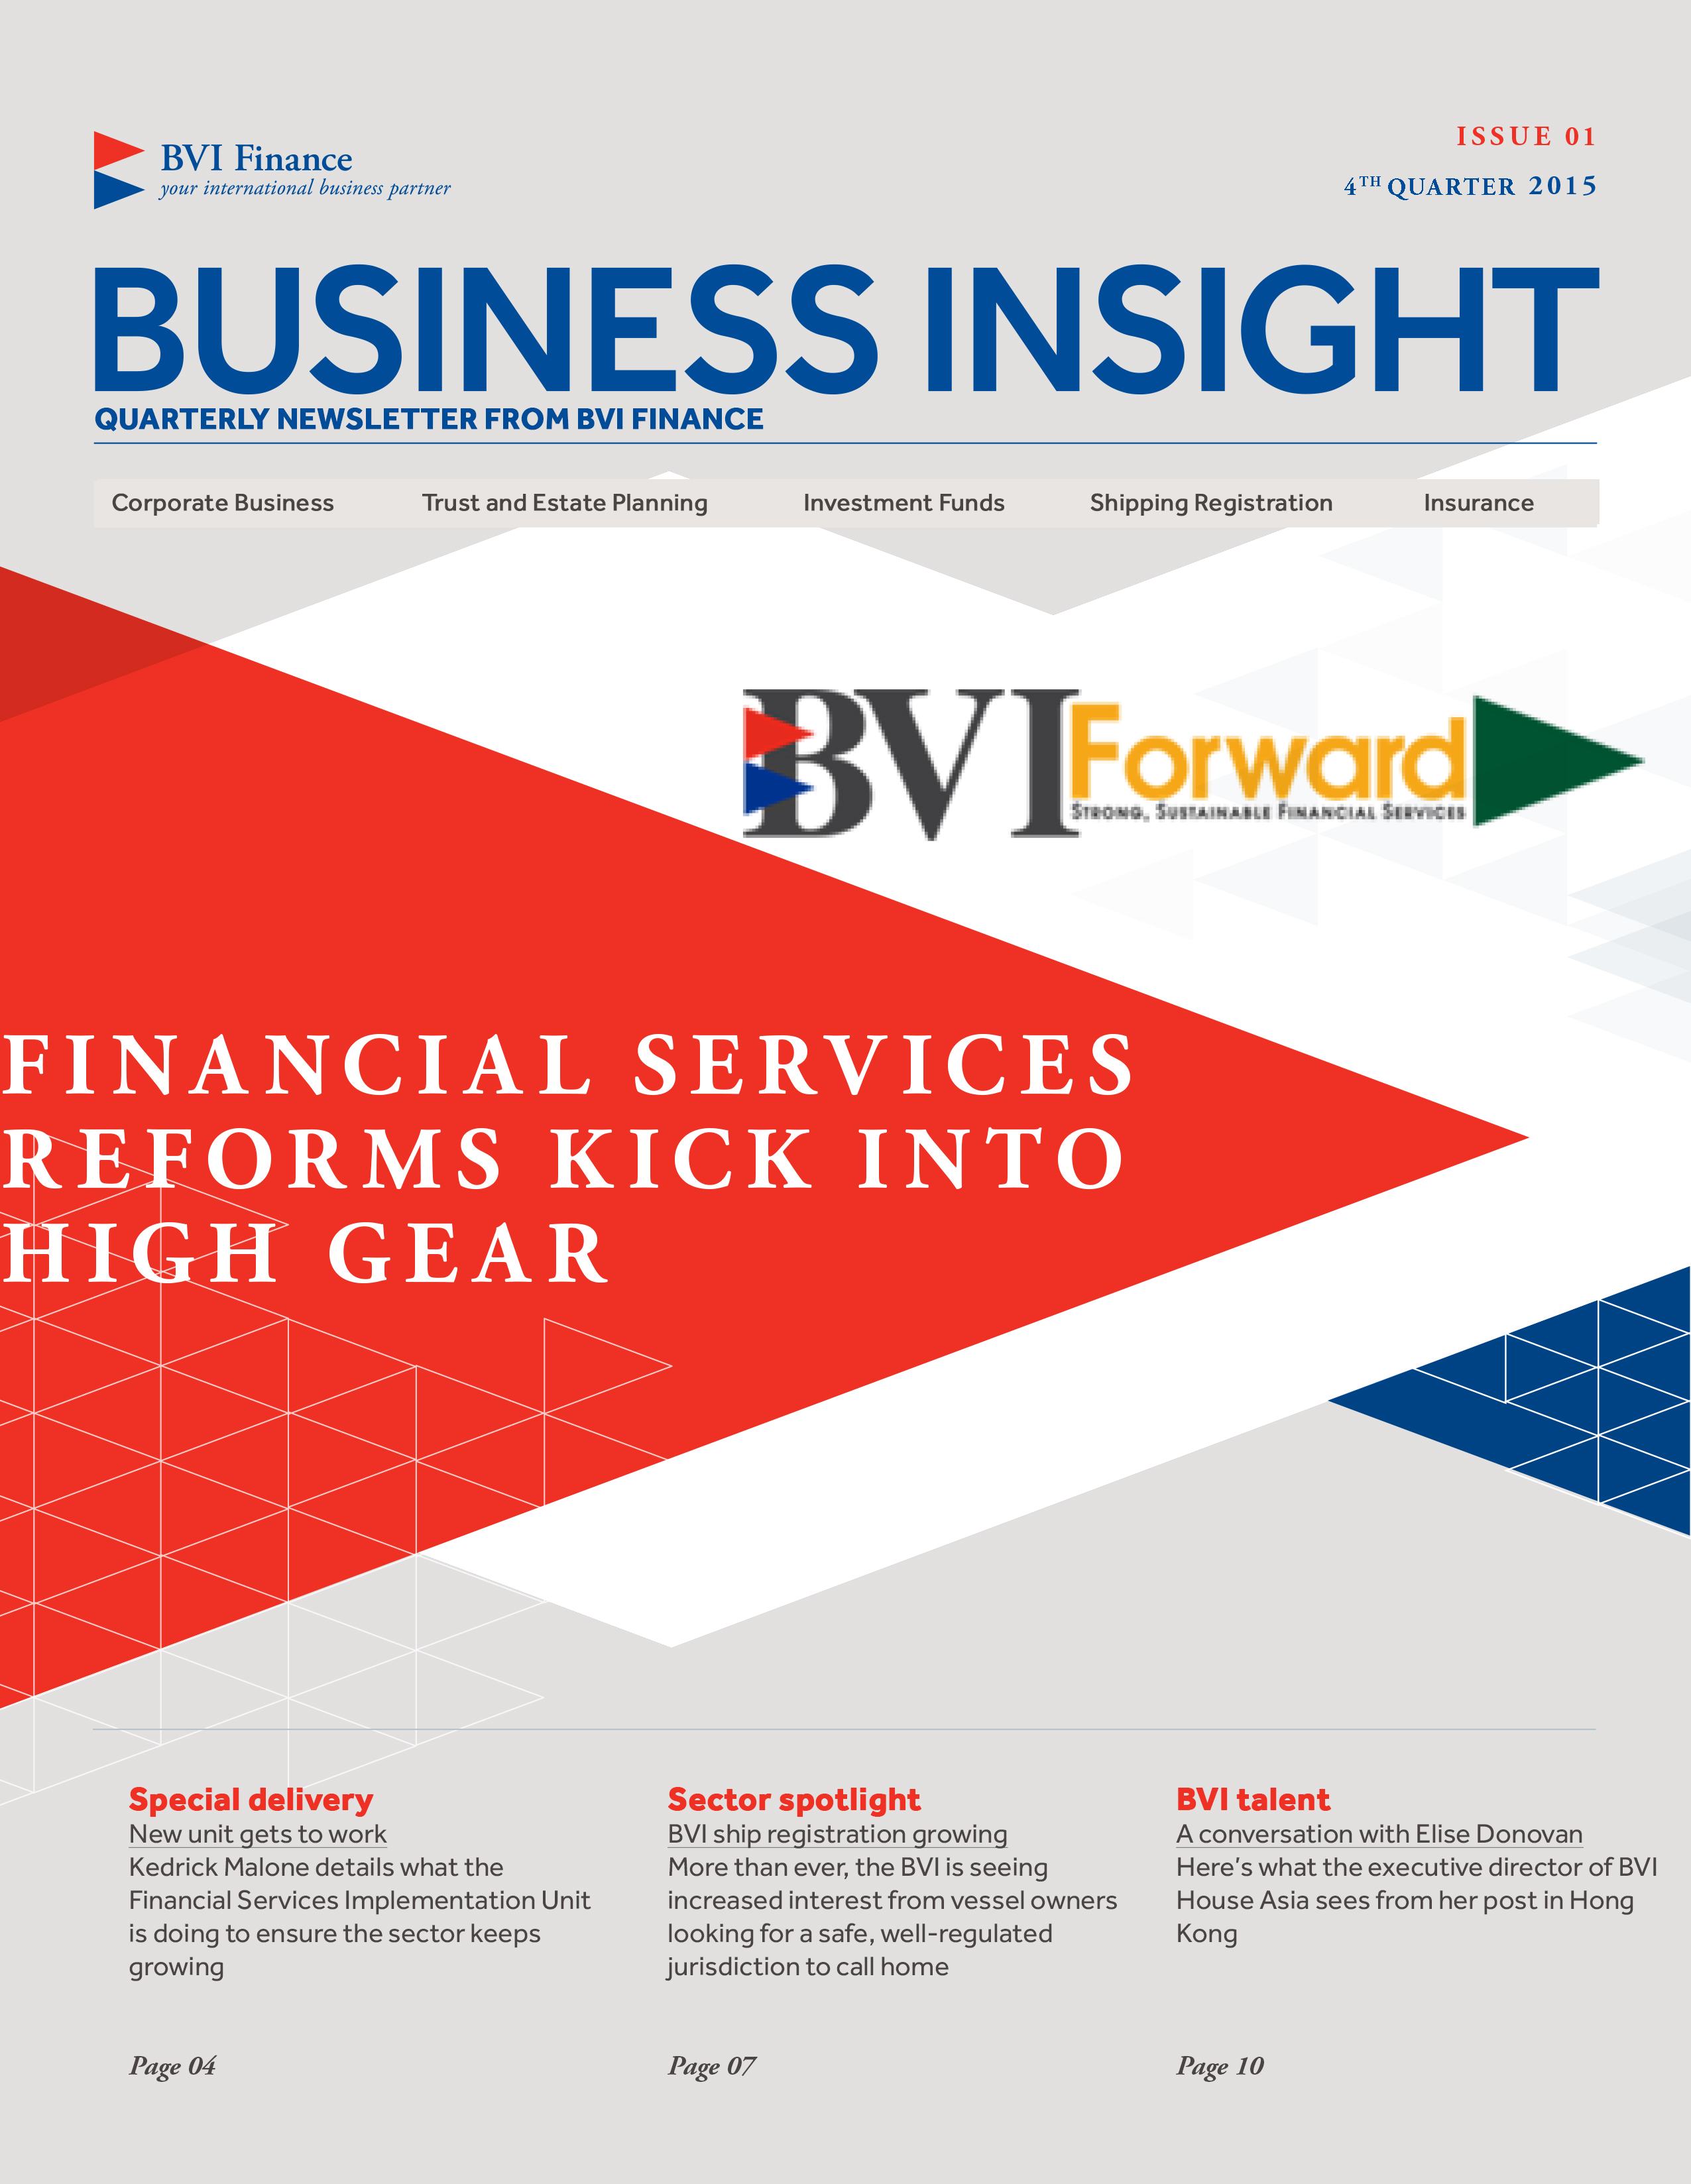 Business Insight Newsletter: 4th Quarter